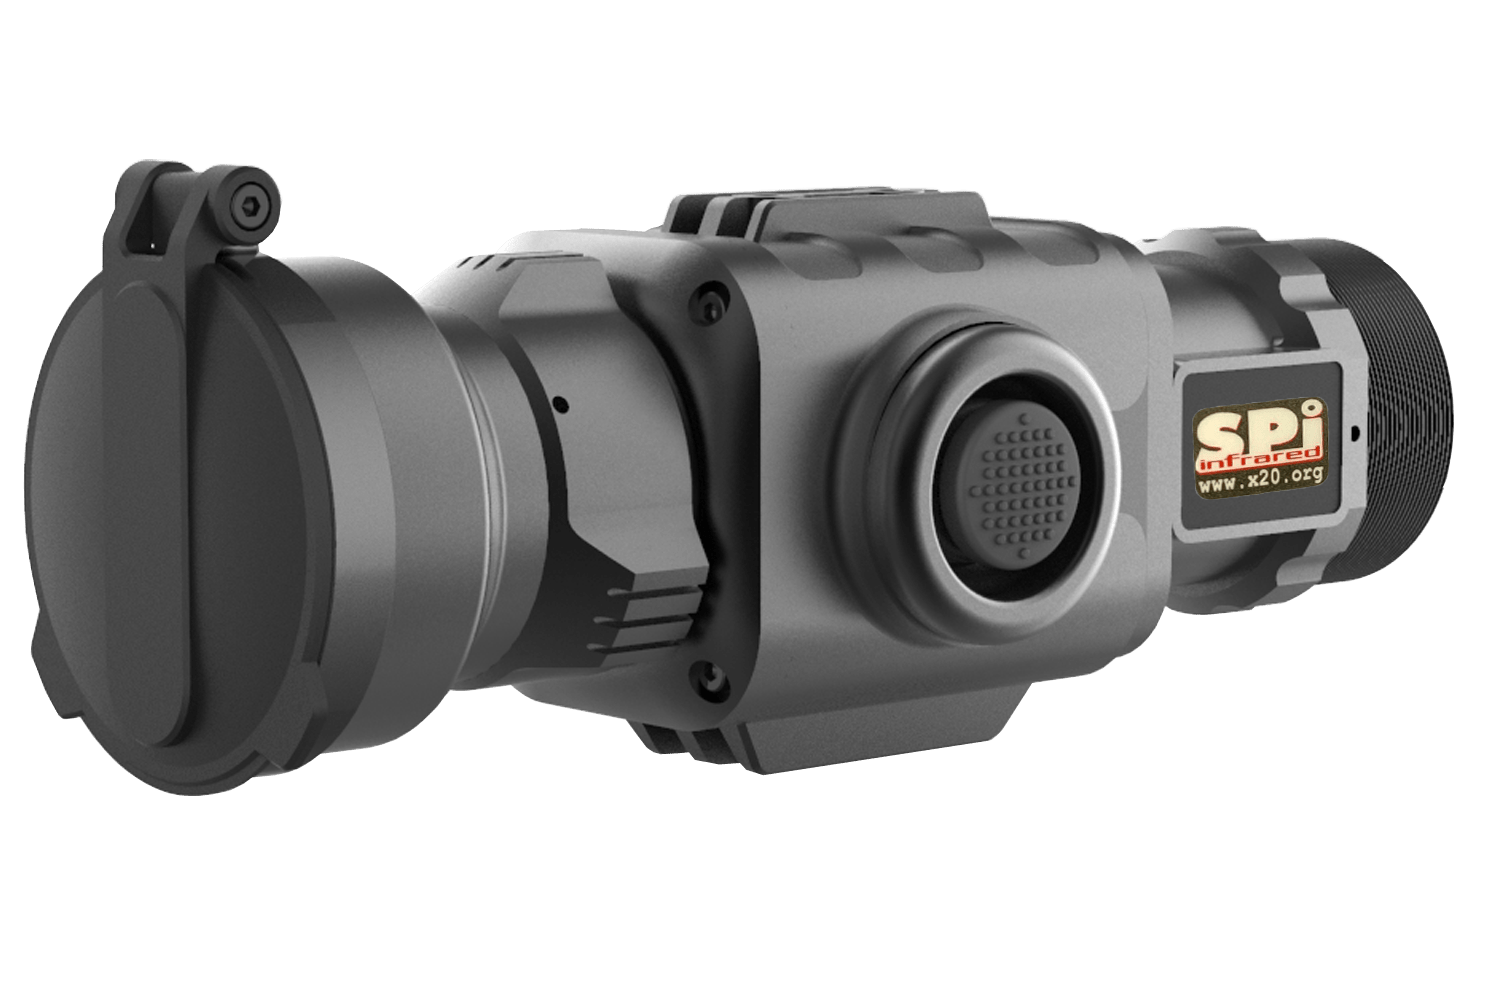 SPI DAUBER T384-50-MC THERMAL CLIP-ON scope